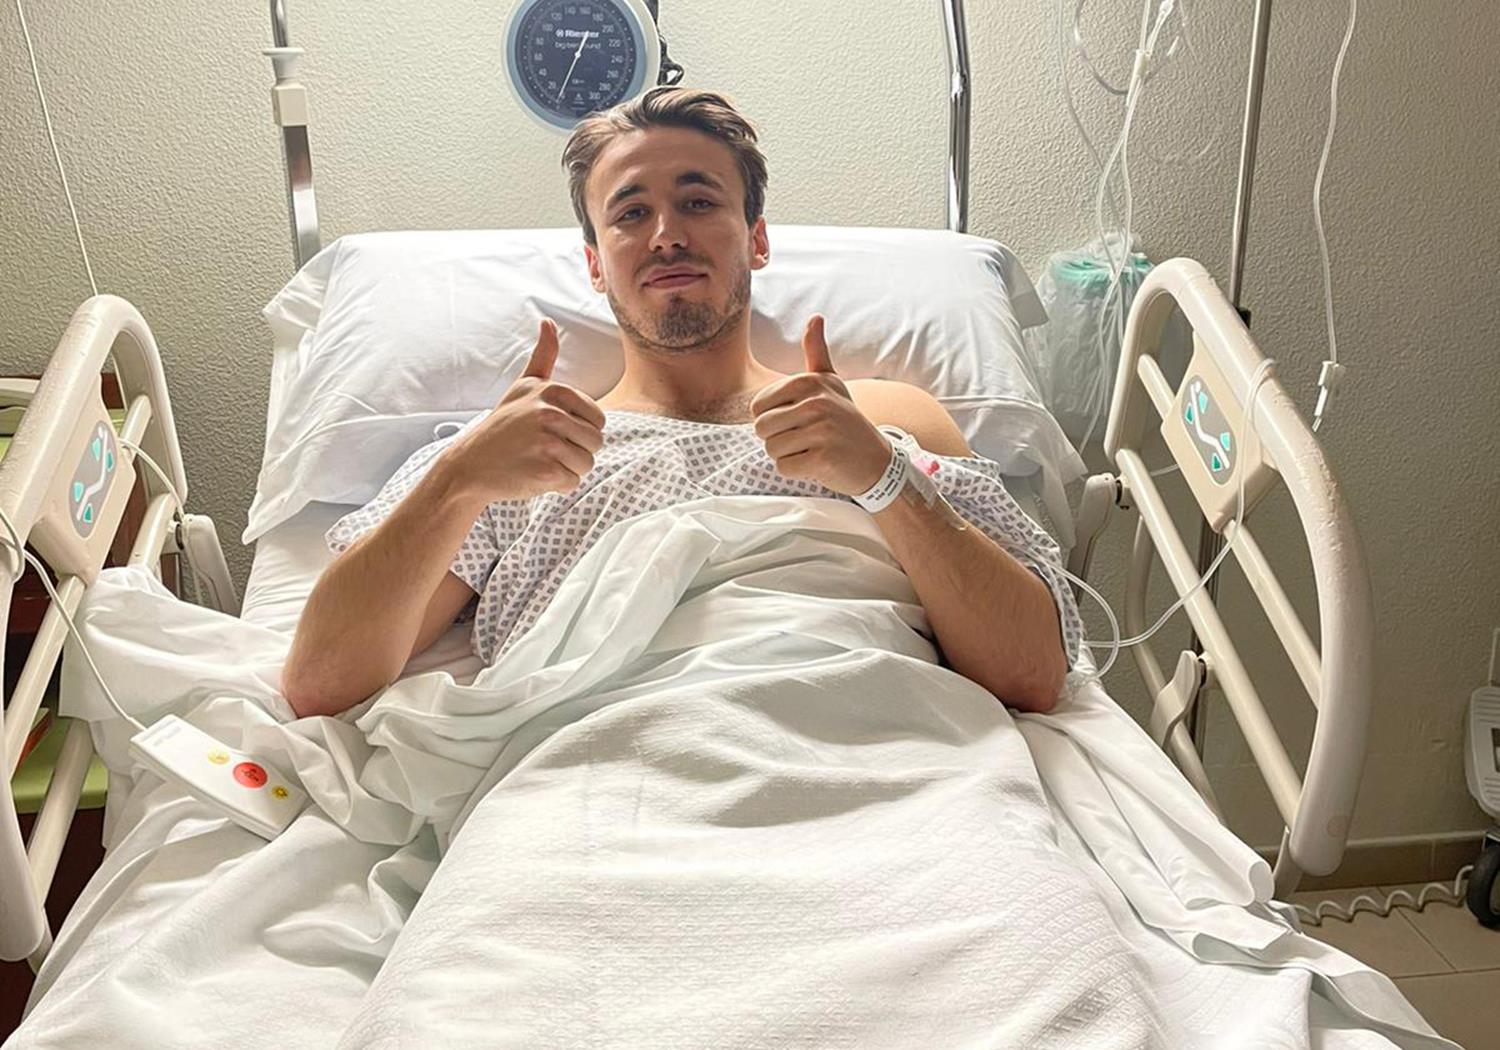 Trabzonsporlu Anders Trondsen, spanya'da ameliyat oldu